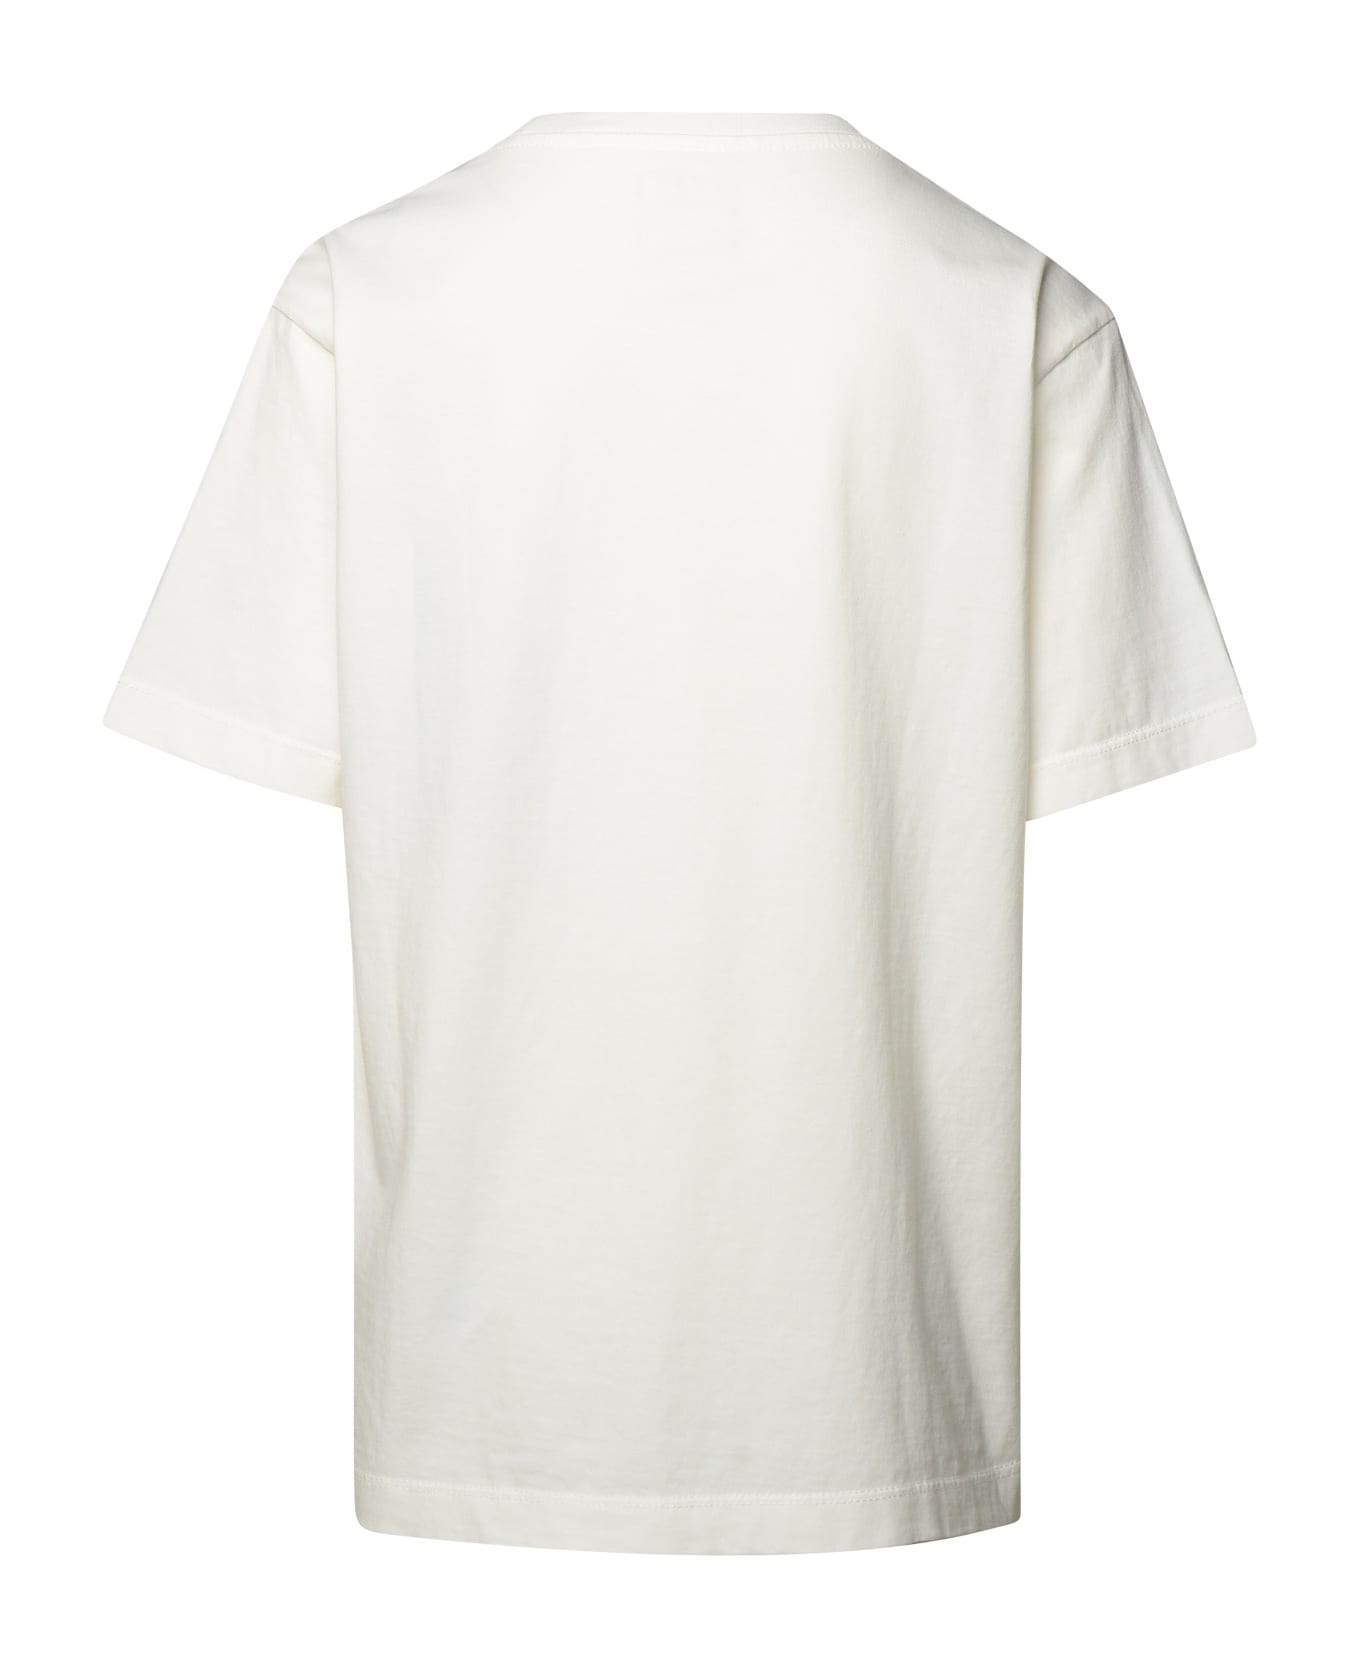 C.P. Company White Cotton T-shirt - White